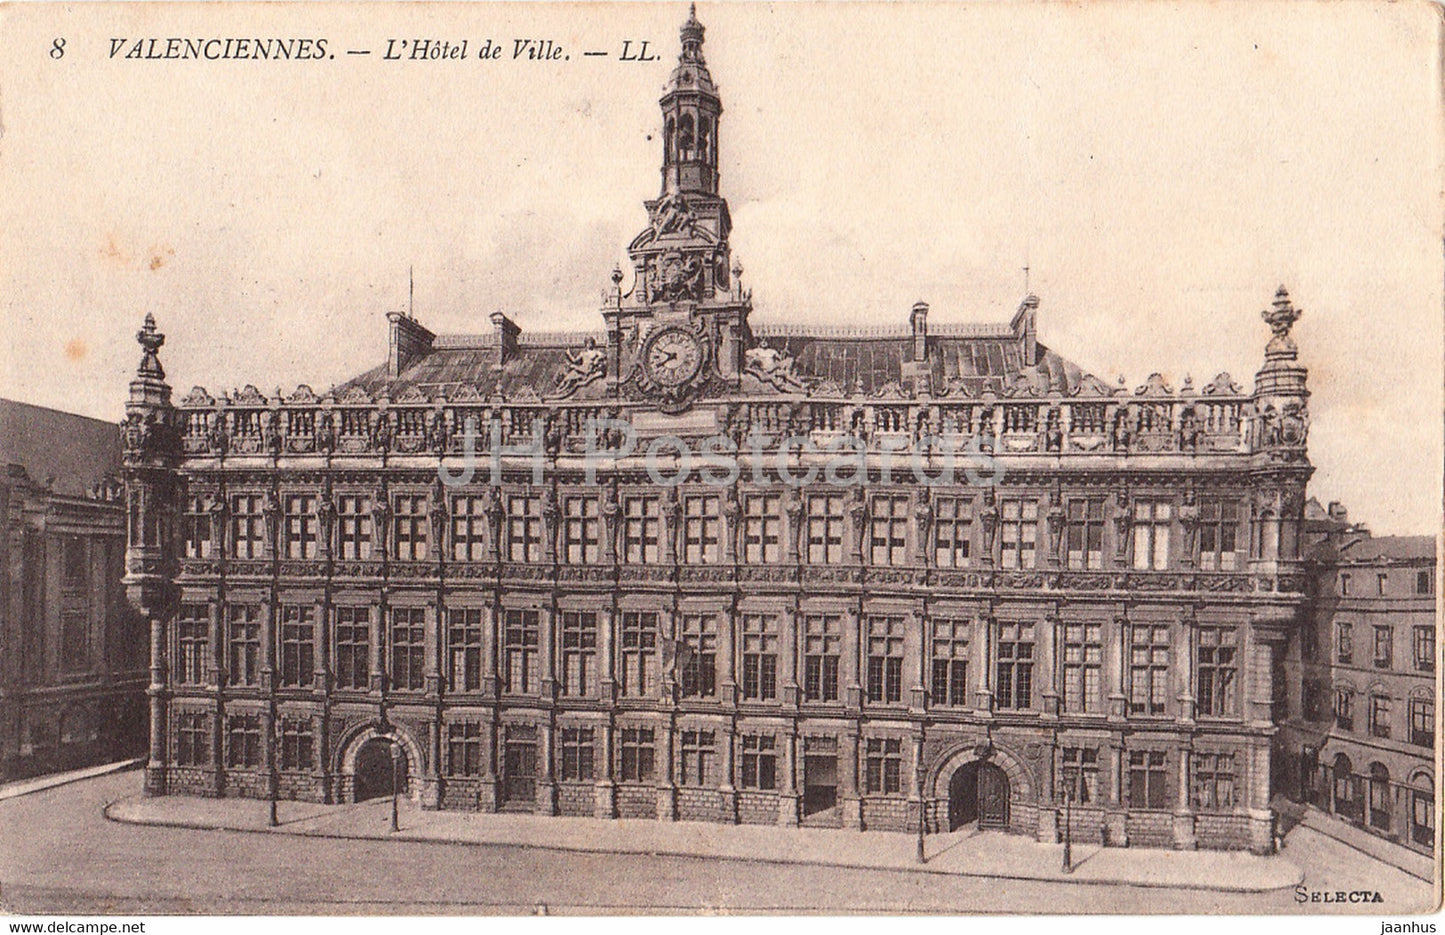 Valenciennes - L'Hotel de Ville - Feldpost - 8 - old postcard - France - used - JH Postcards